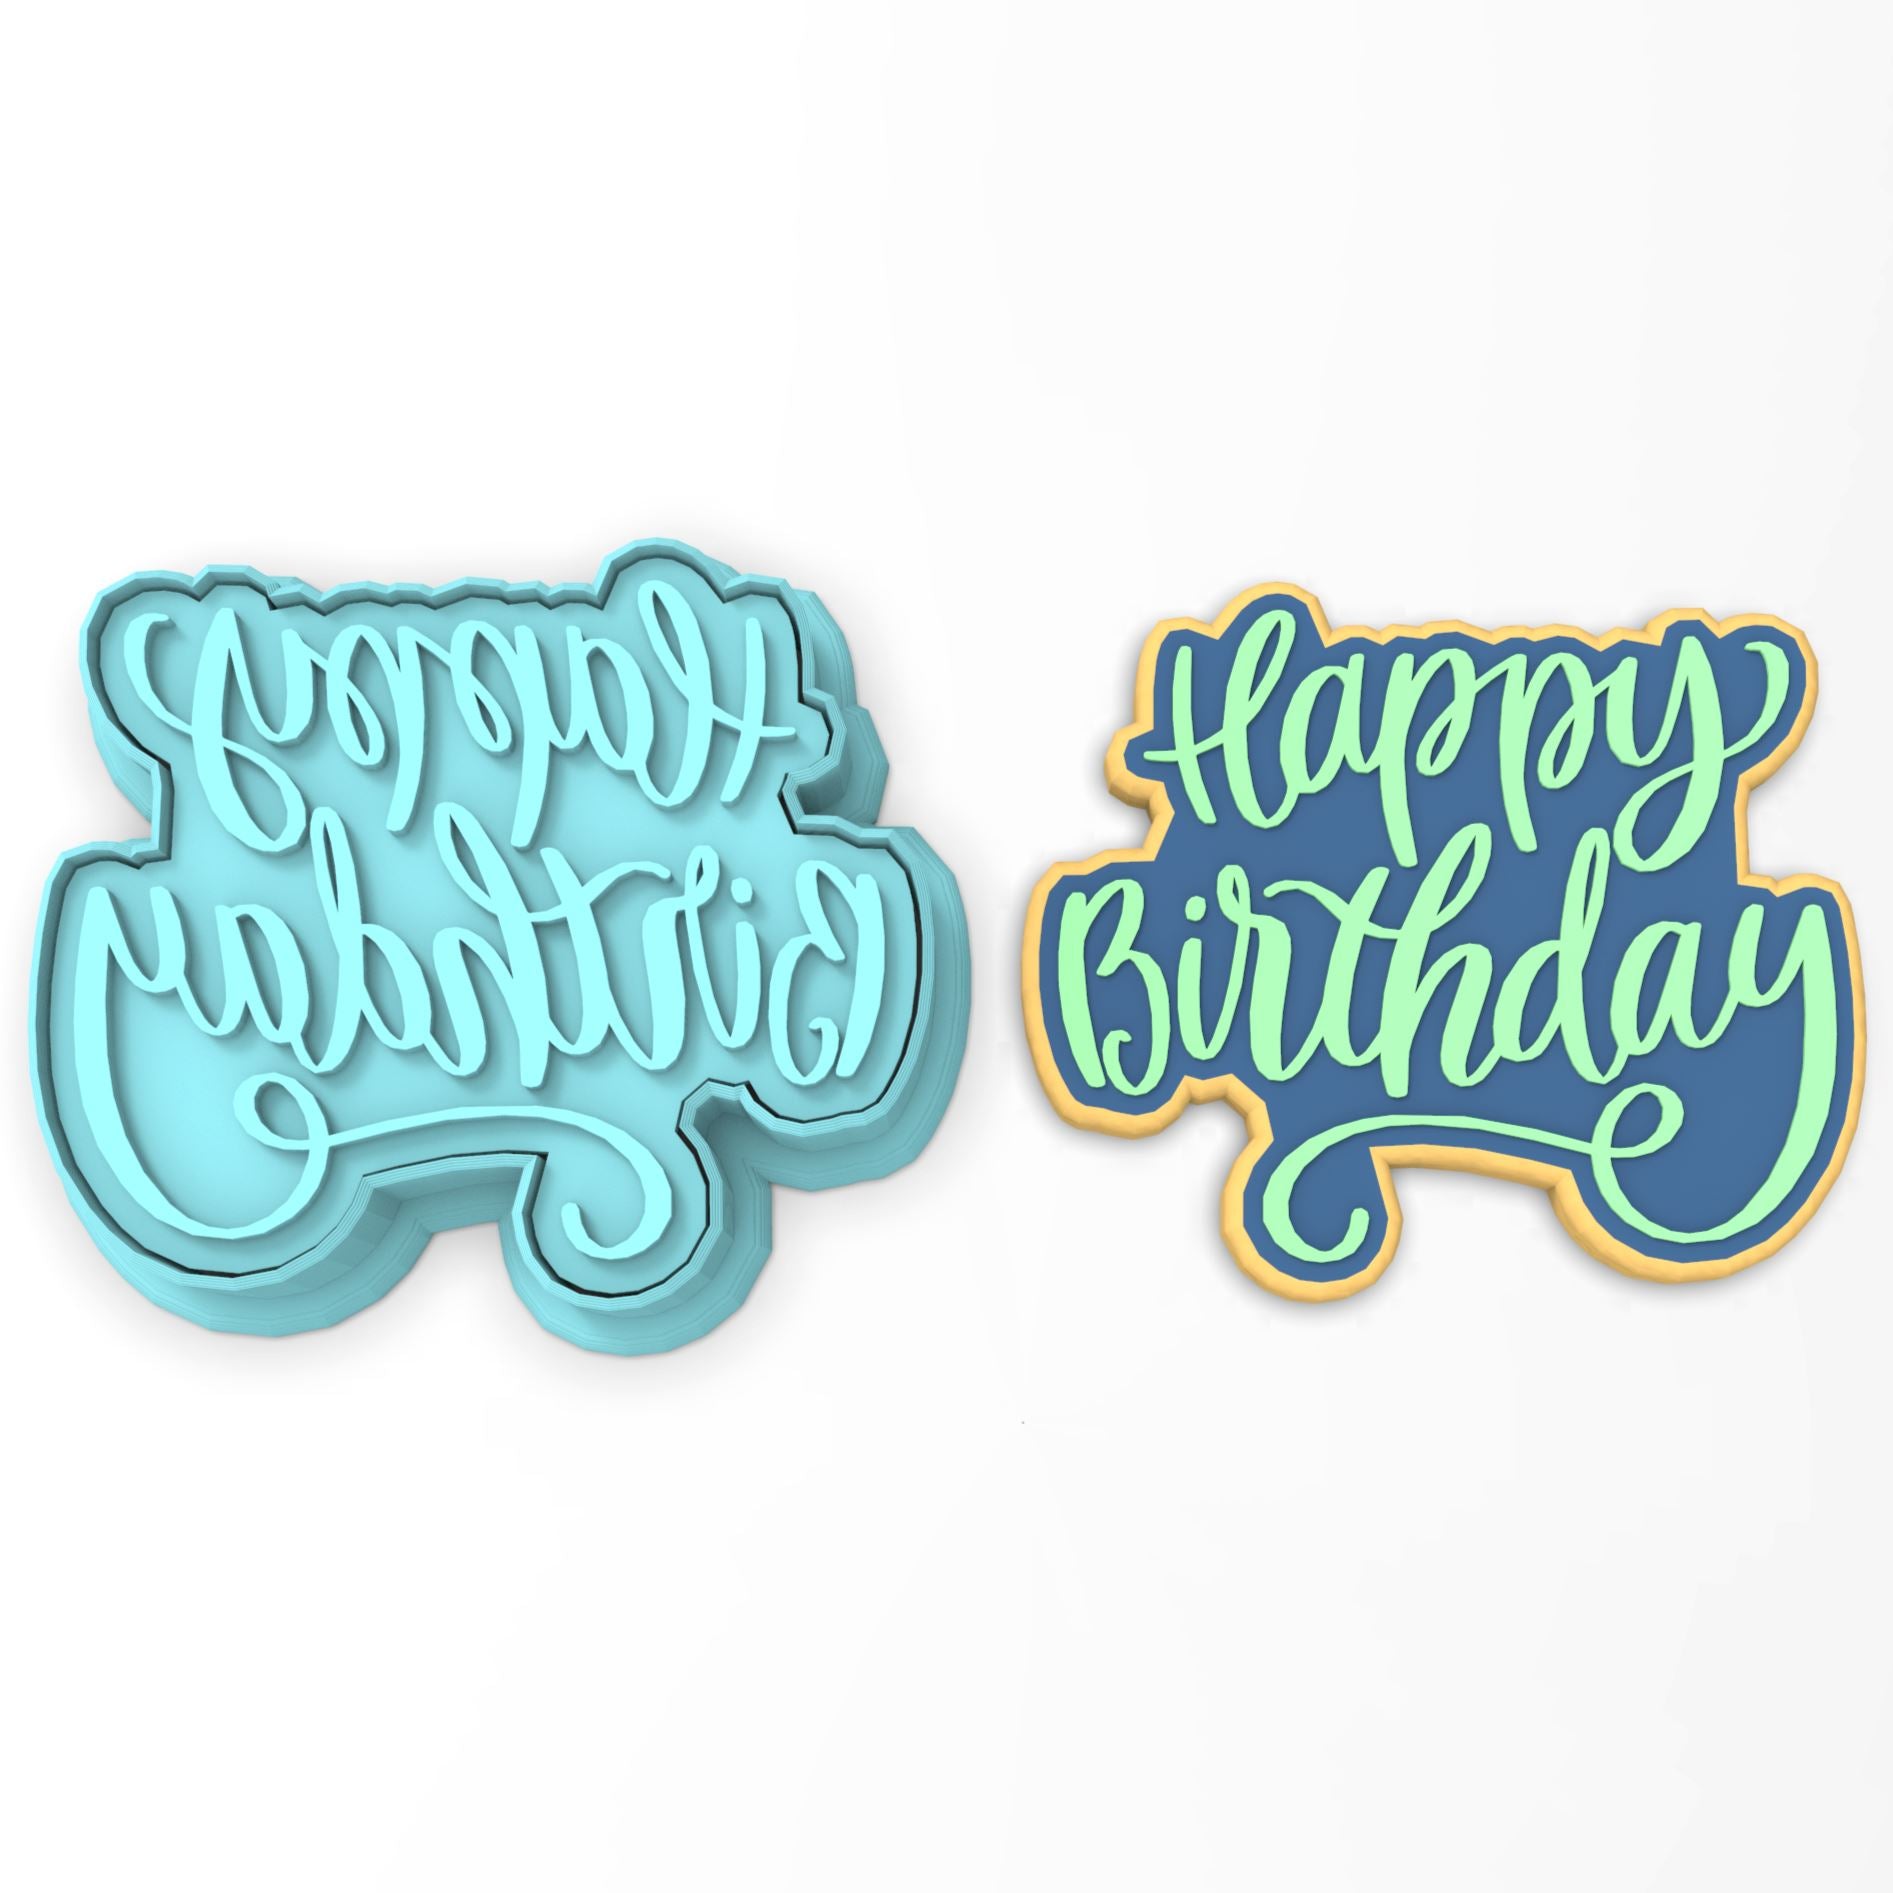 Happy Birthday with stars (matching cutter) - Stencil – Make It